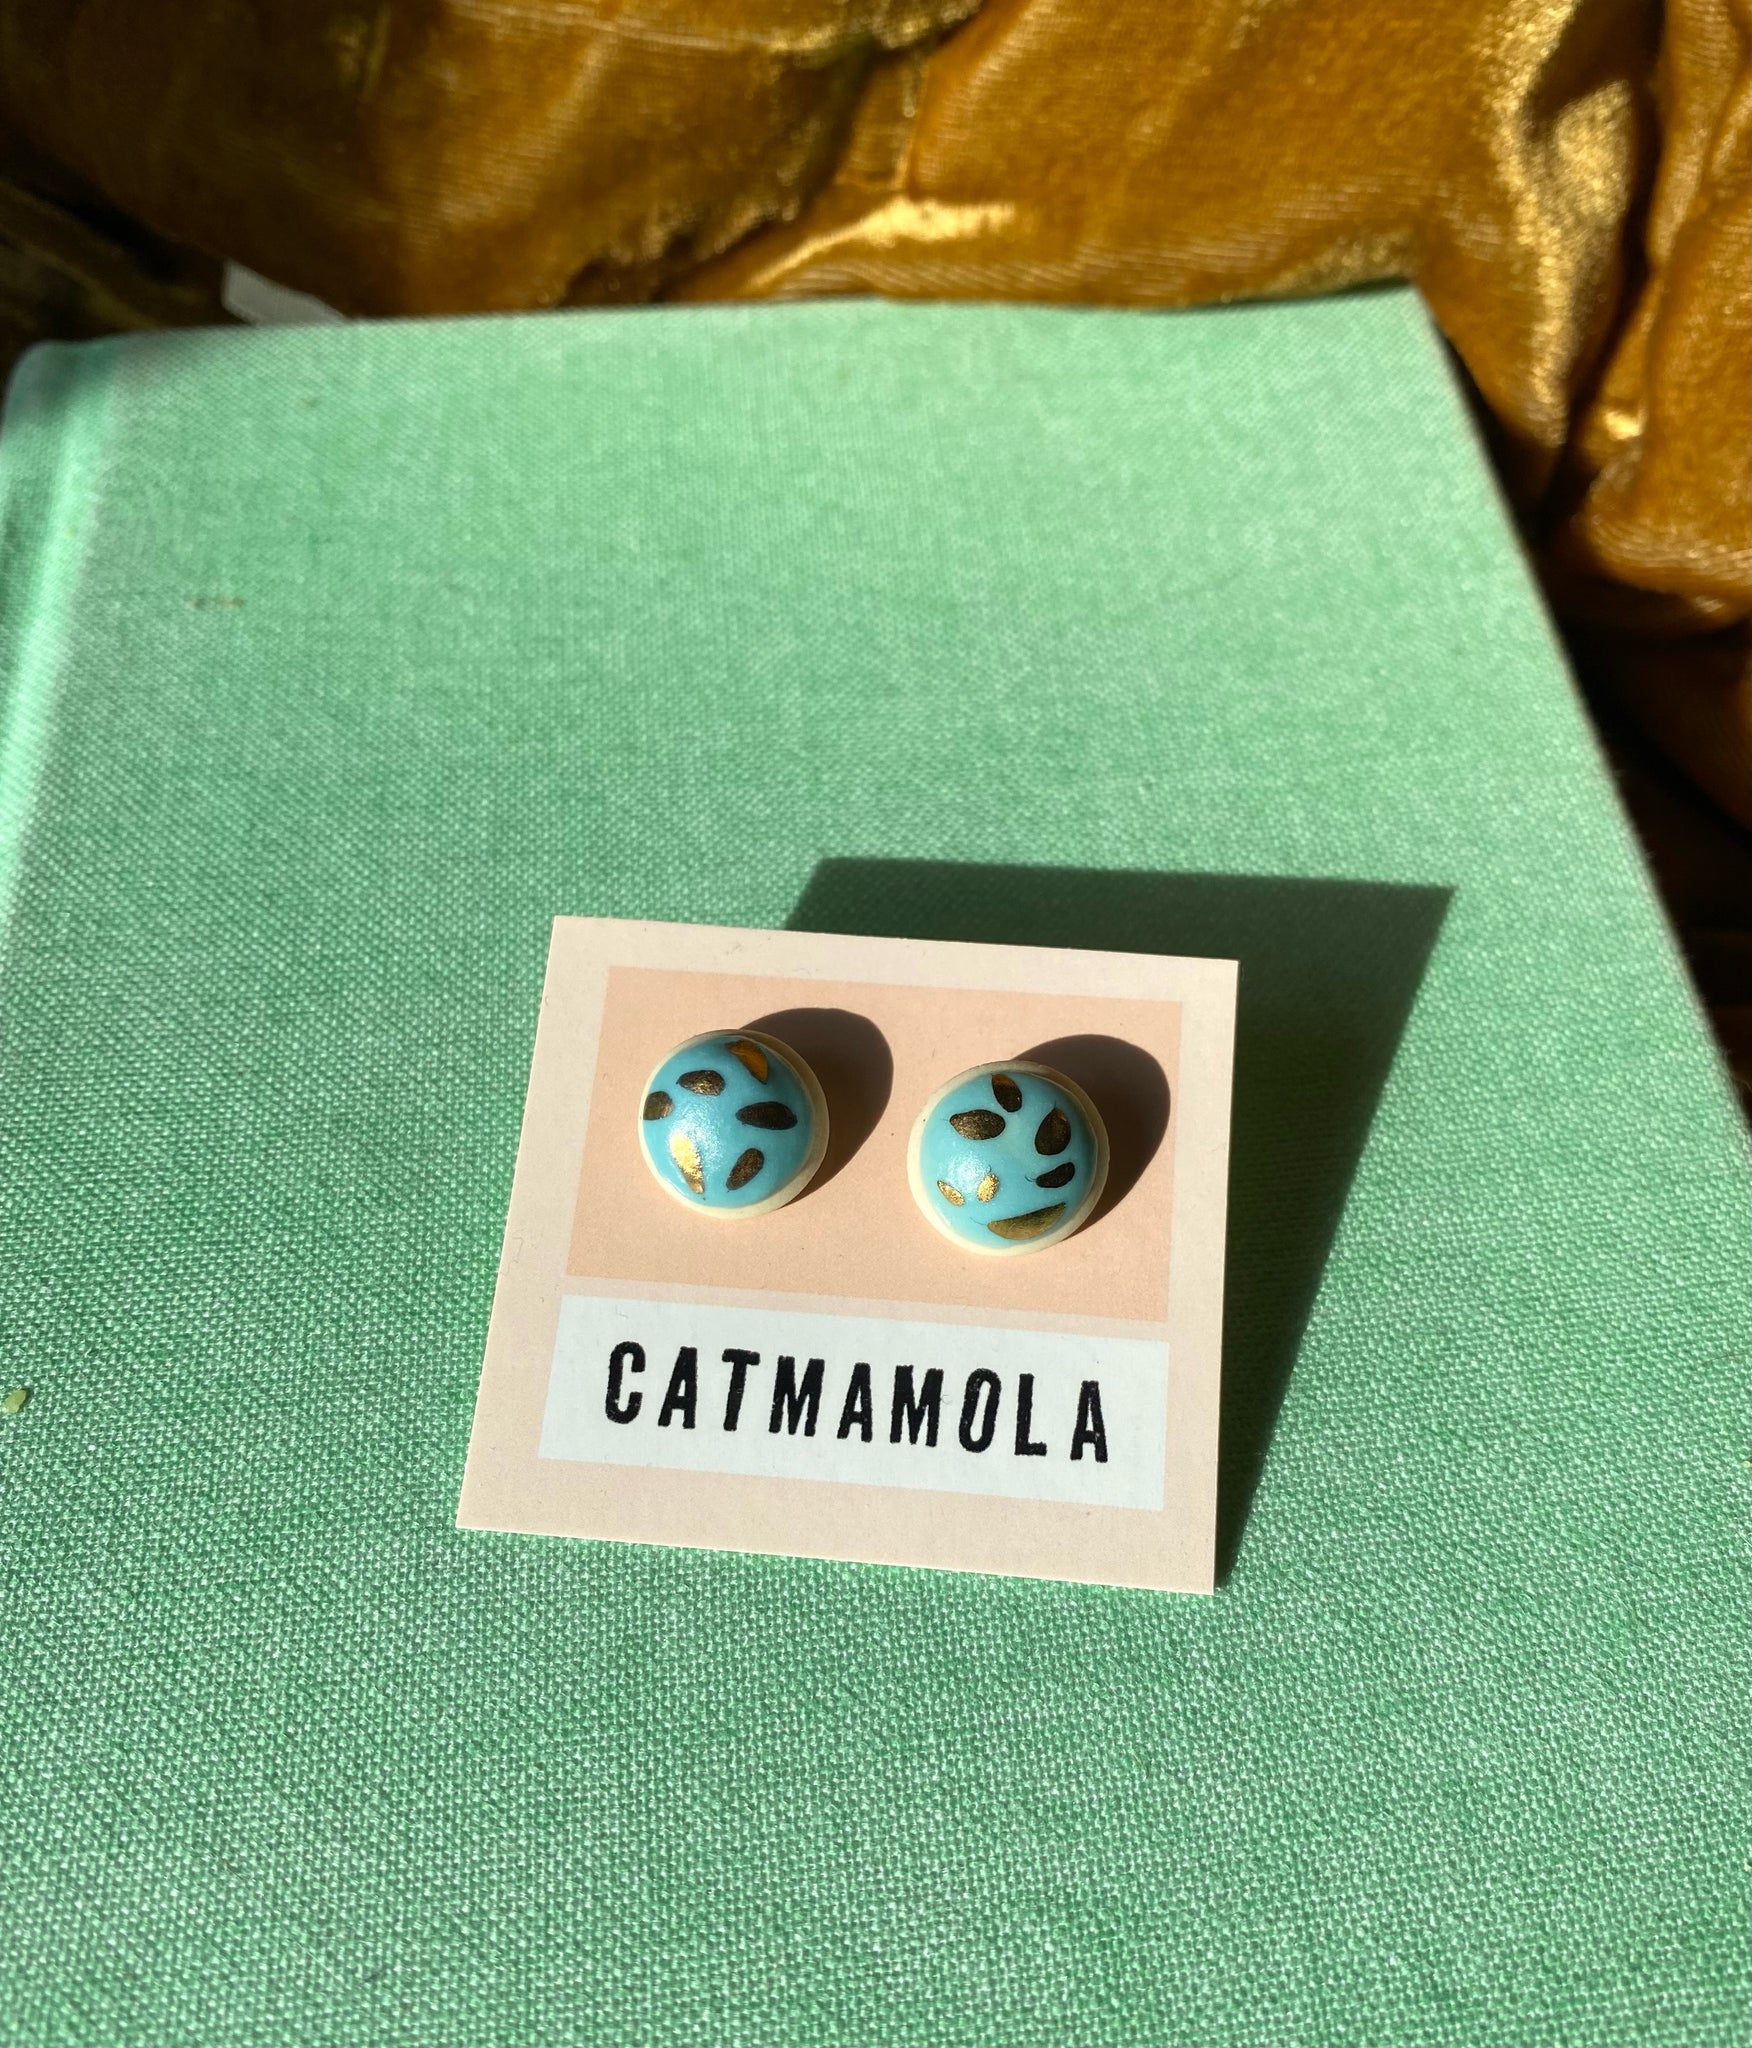 Catmamola Ceramics - Stud Earrings in Aqua